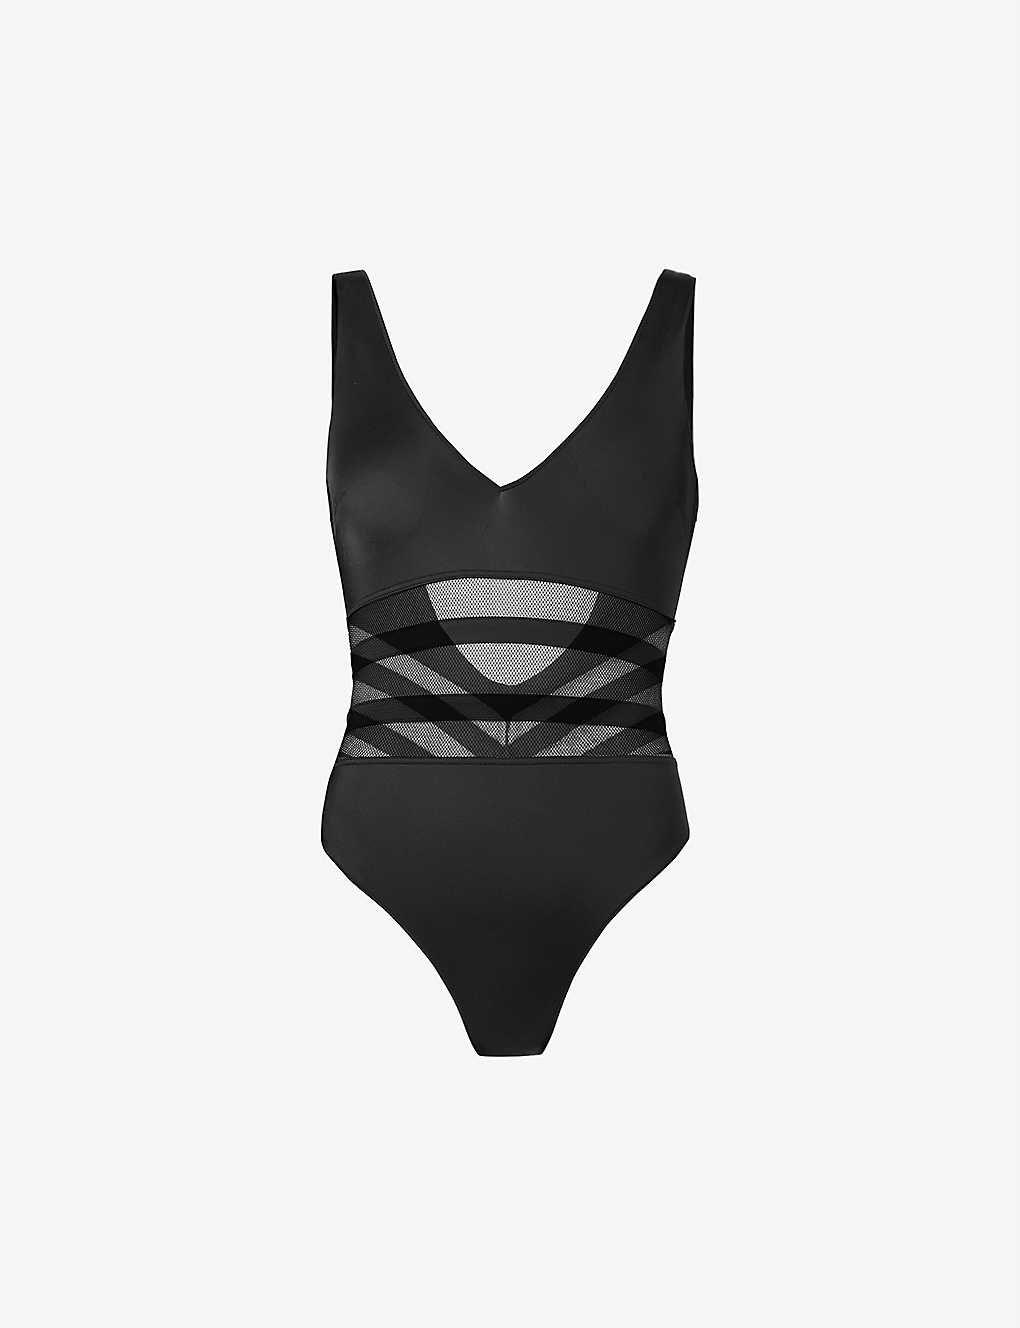 Zenaya mesh-panel swimsuit | Selfridges